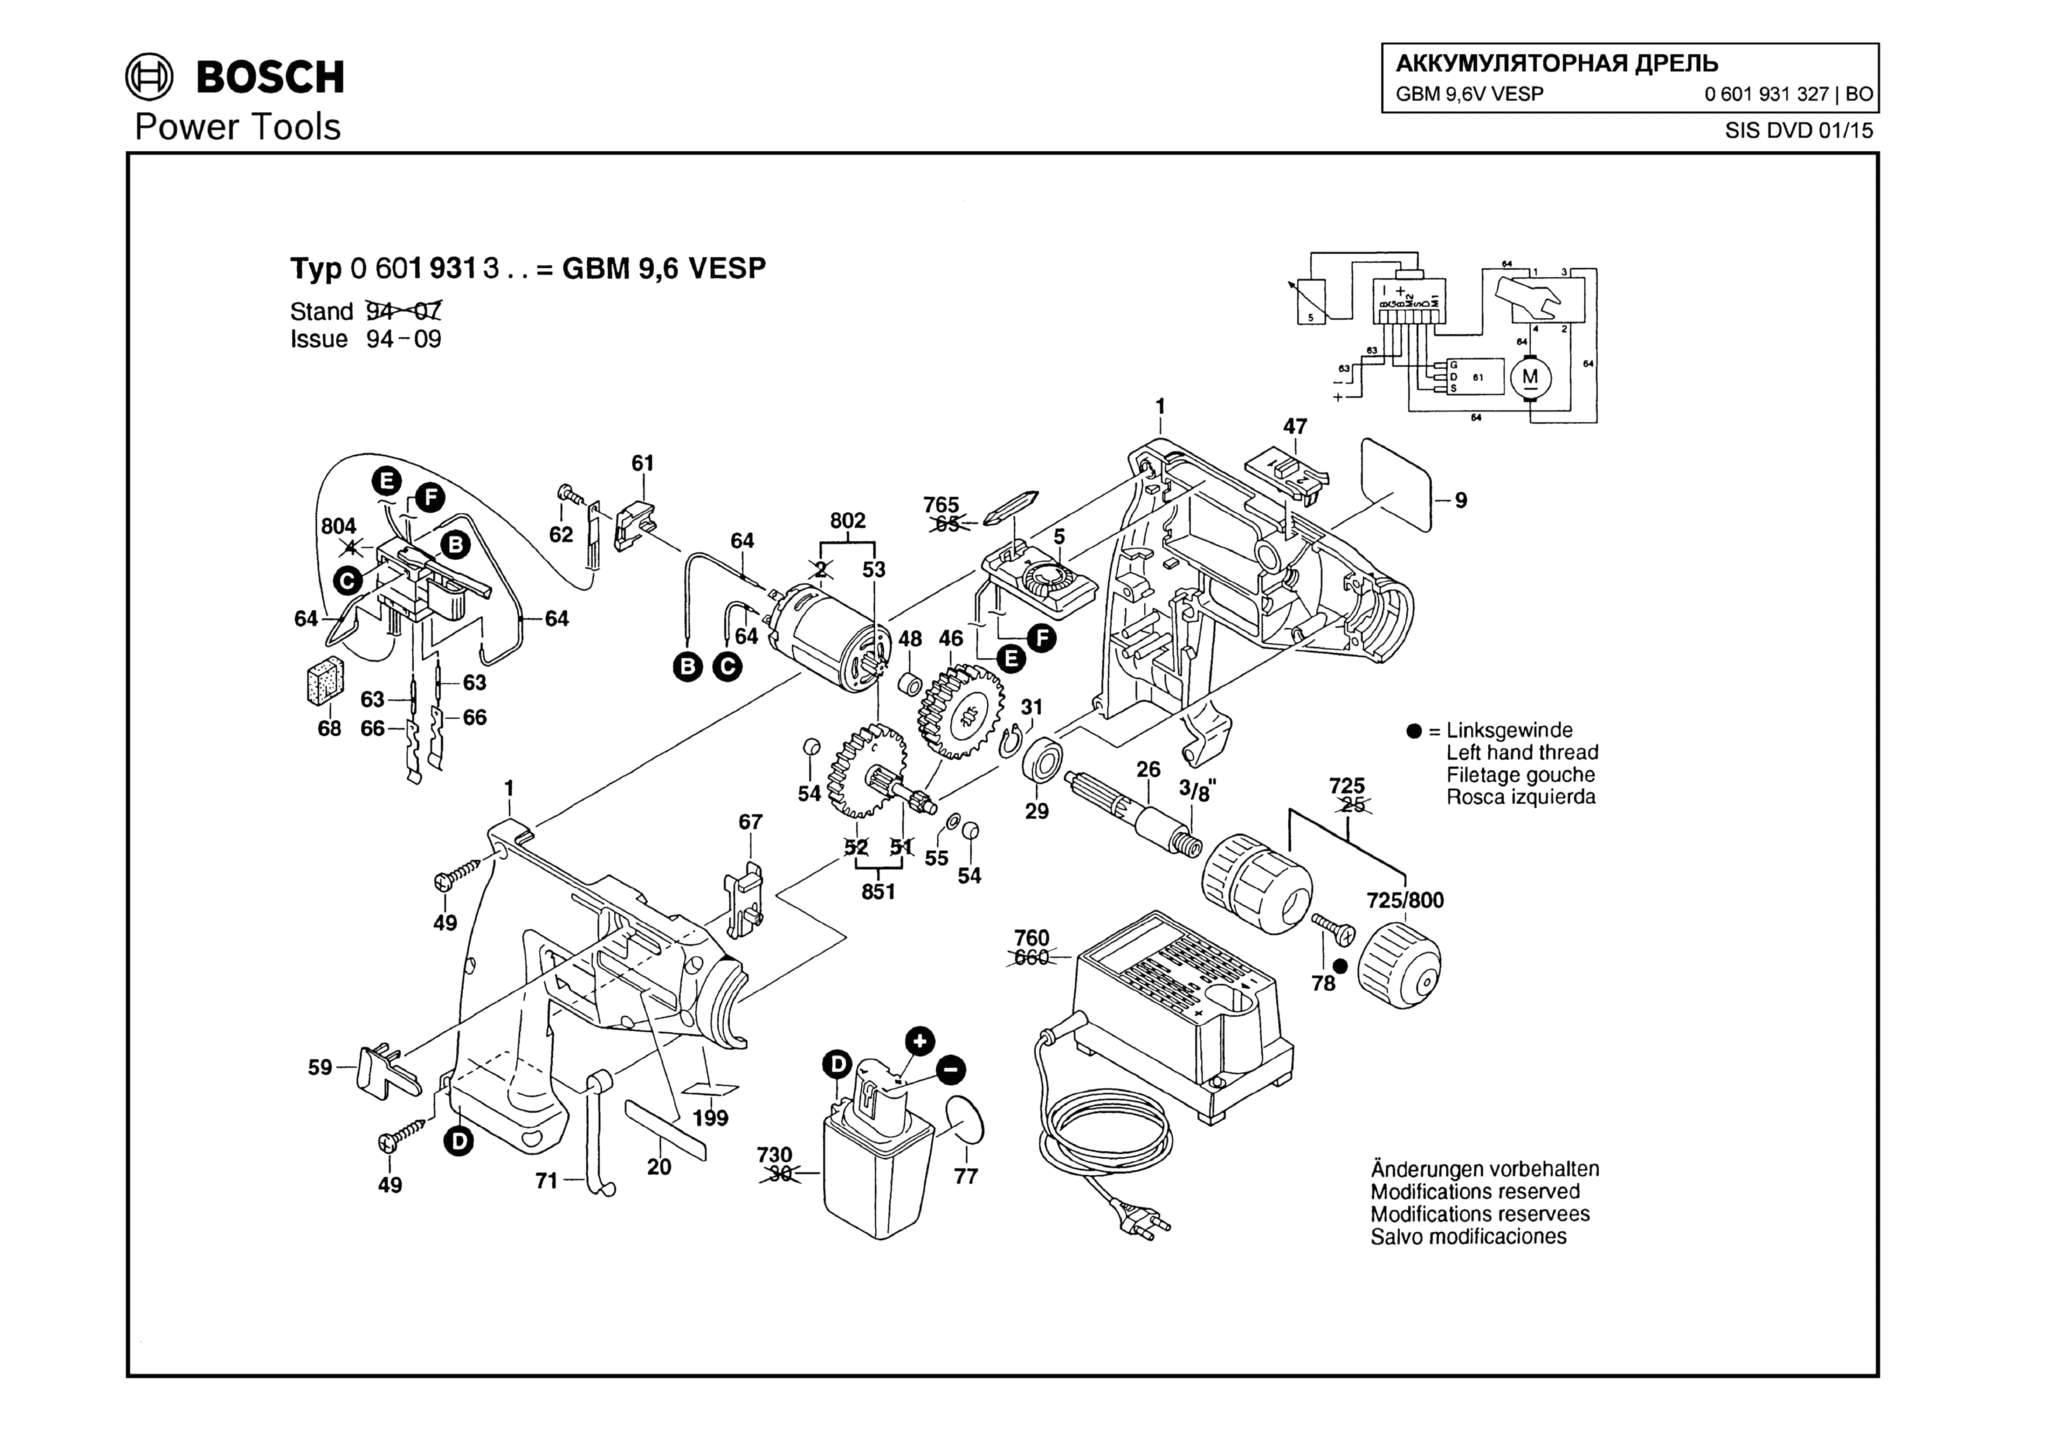 Запчасти, схема и деталировка Bosch GBM 9,6V VESP (ТИП 0601931327)